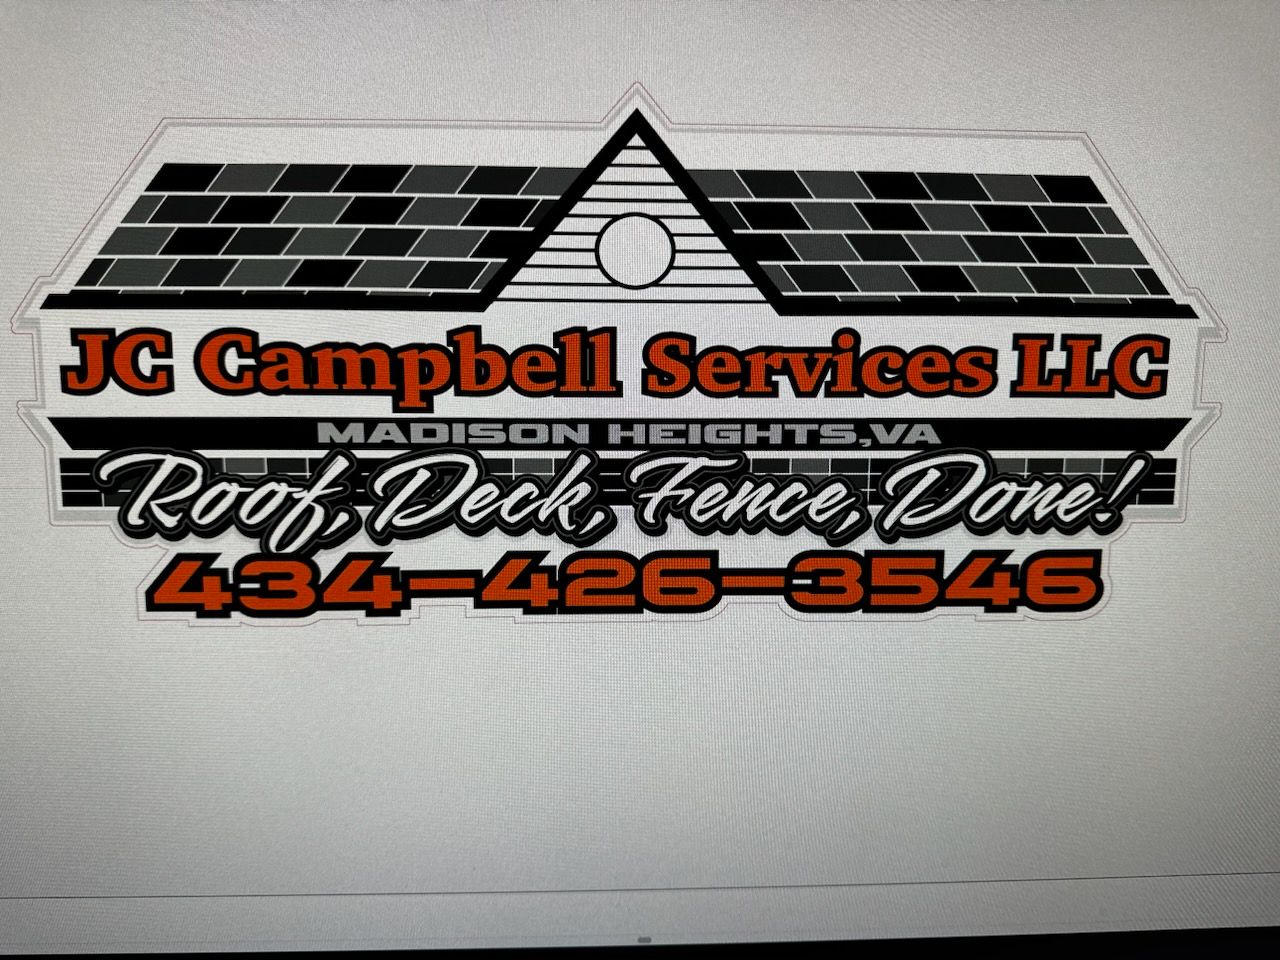 J C Campbell Services LLC